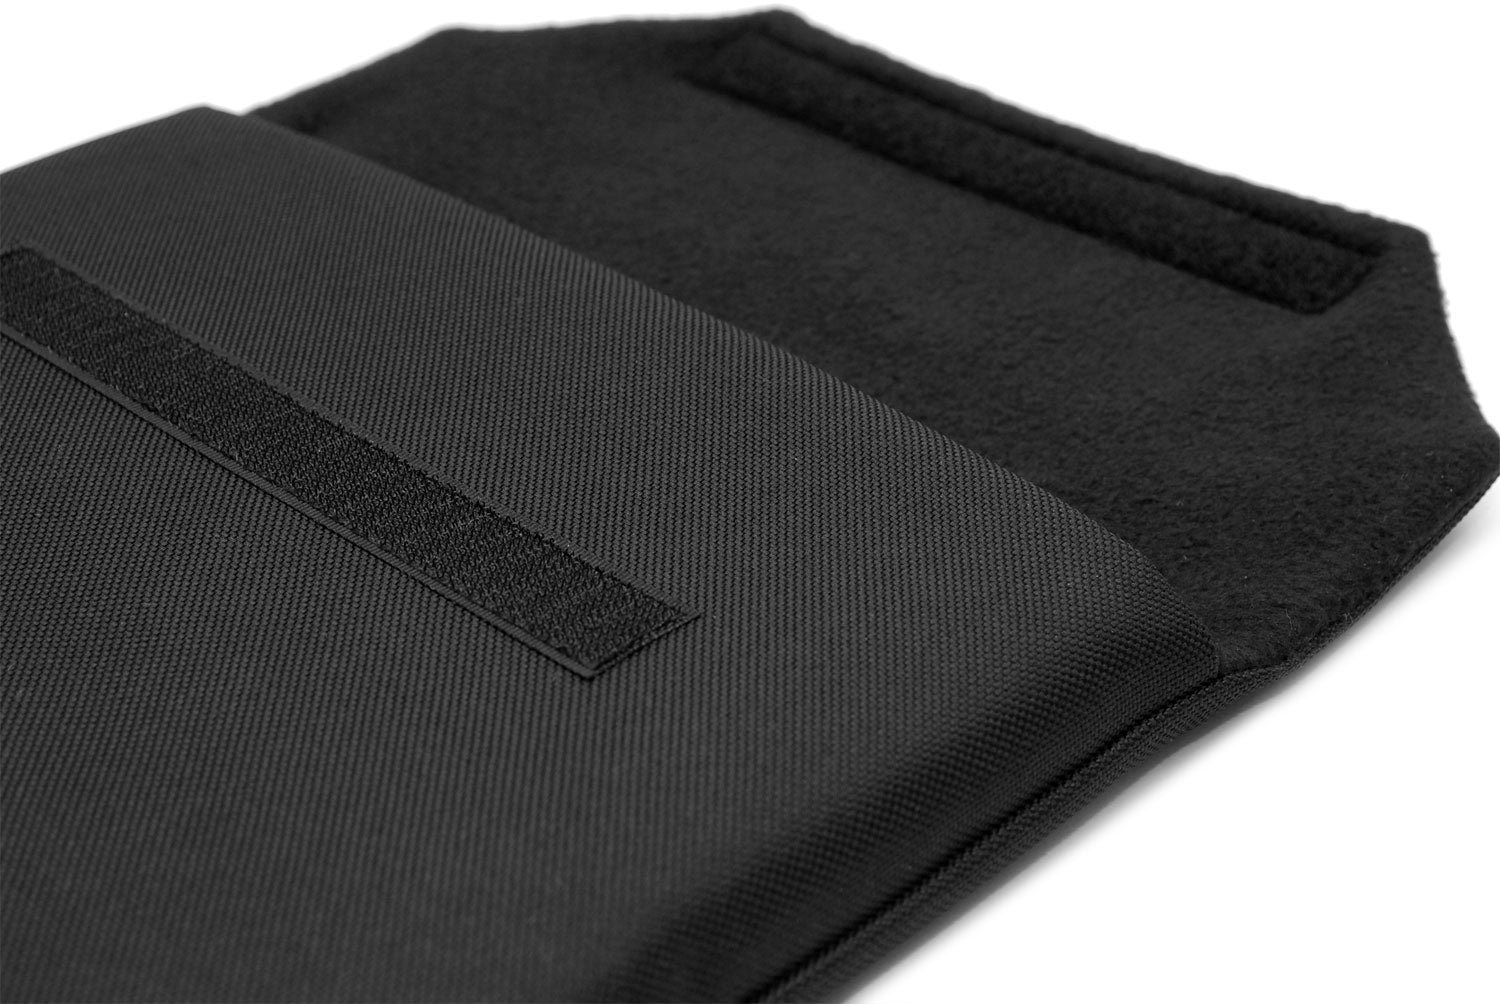 iPad 9.7-inch Sleeve Case - Black Canvas